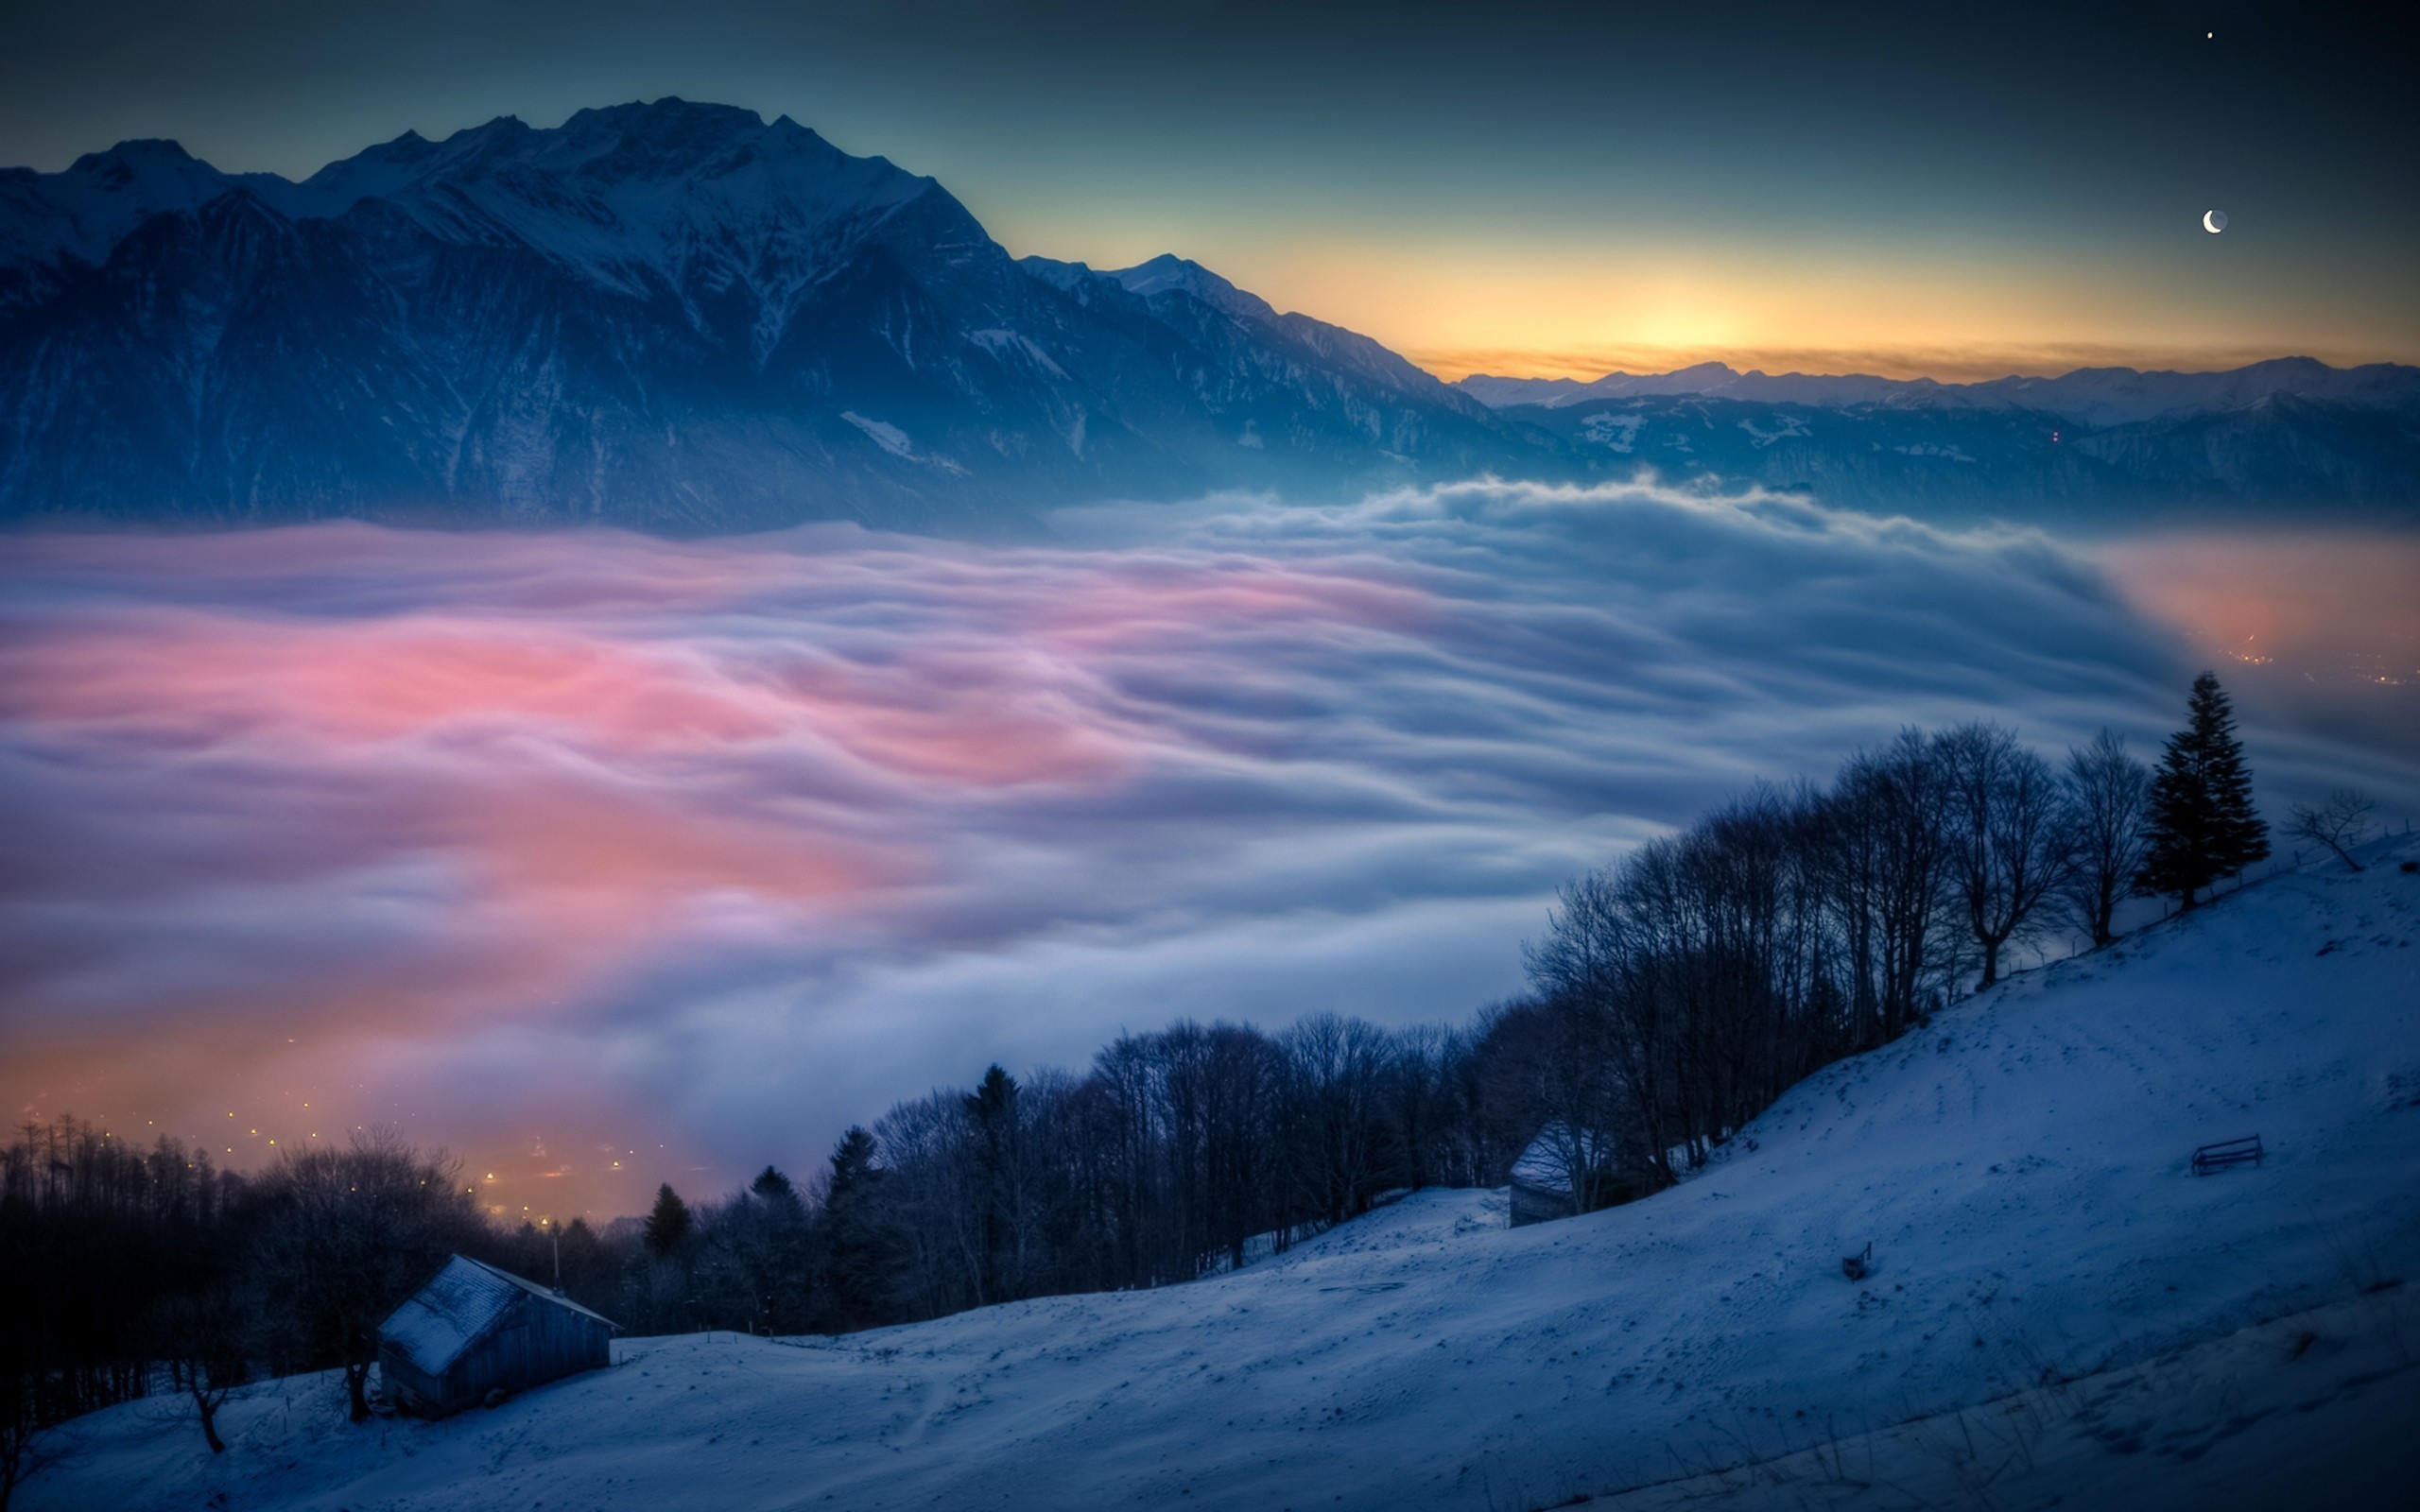 Mountain Fog for 2560 x 1600 widescreen resolution